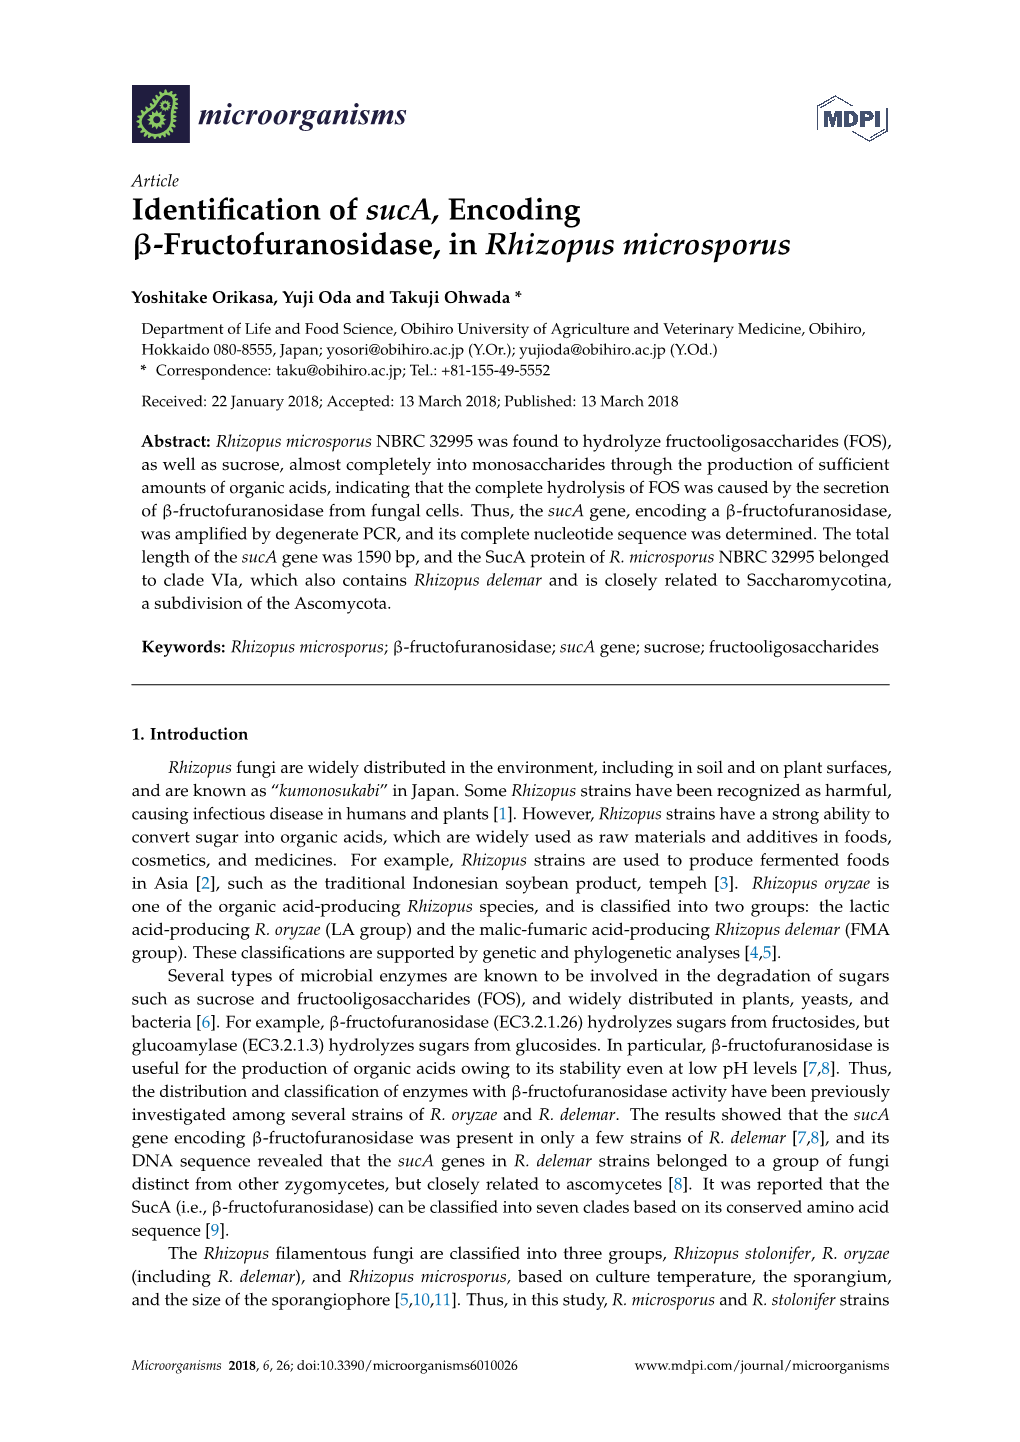 Fructofuranosidase, in Rhizopus Microsporus